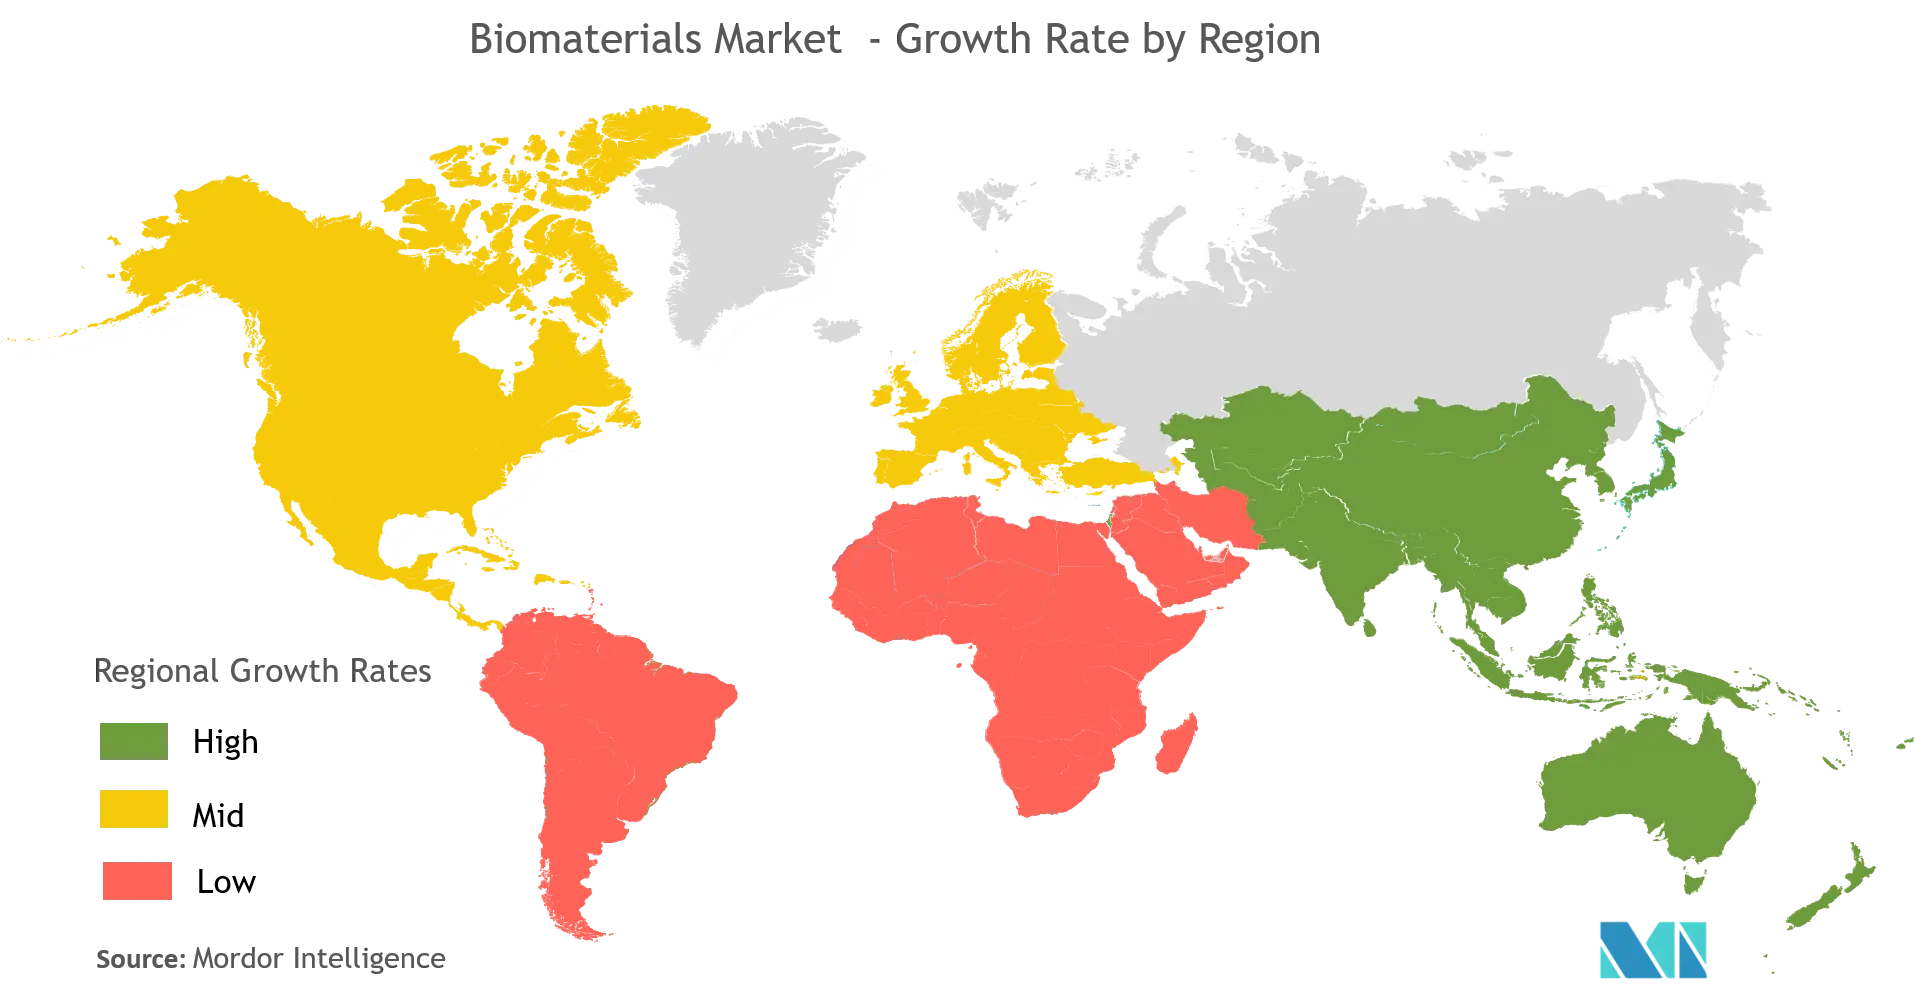 Biomaterials Market Growth by Region